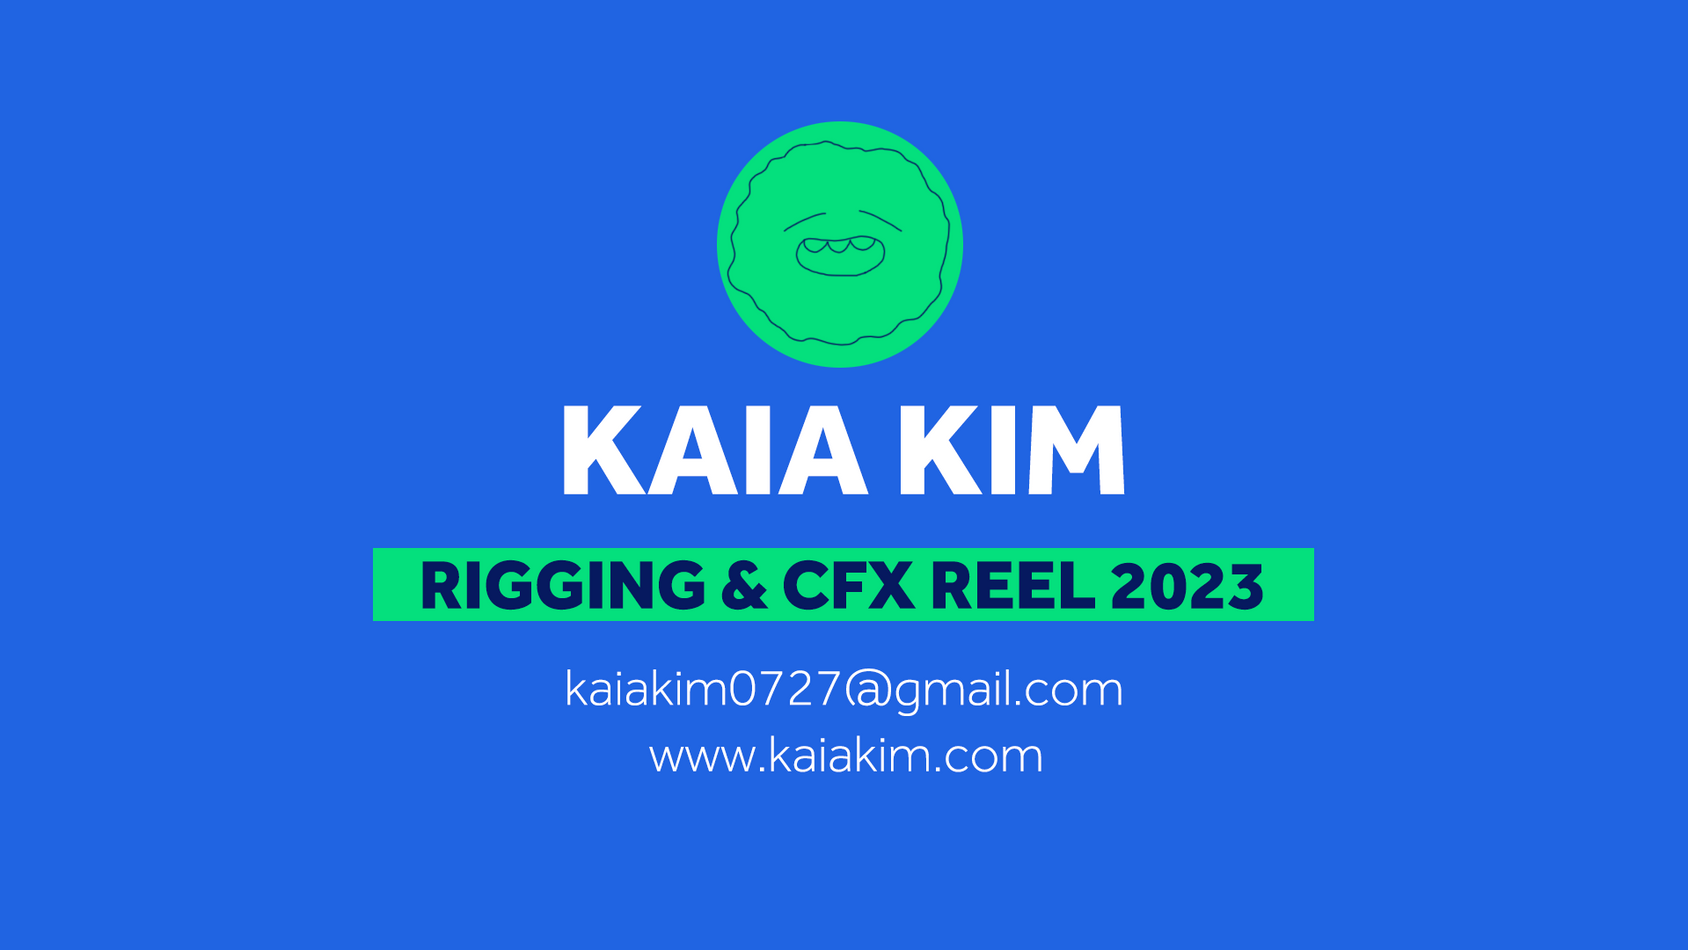 Kaia Kim rigging & CFX reel 2023